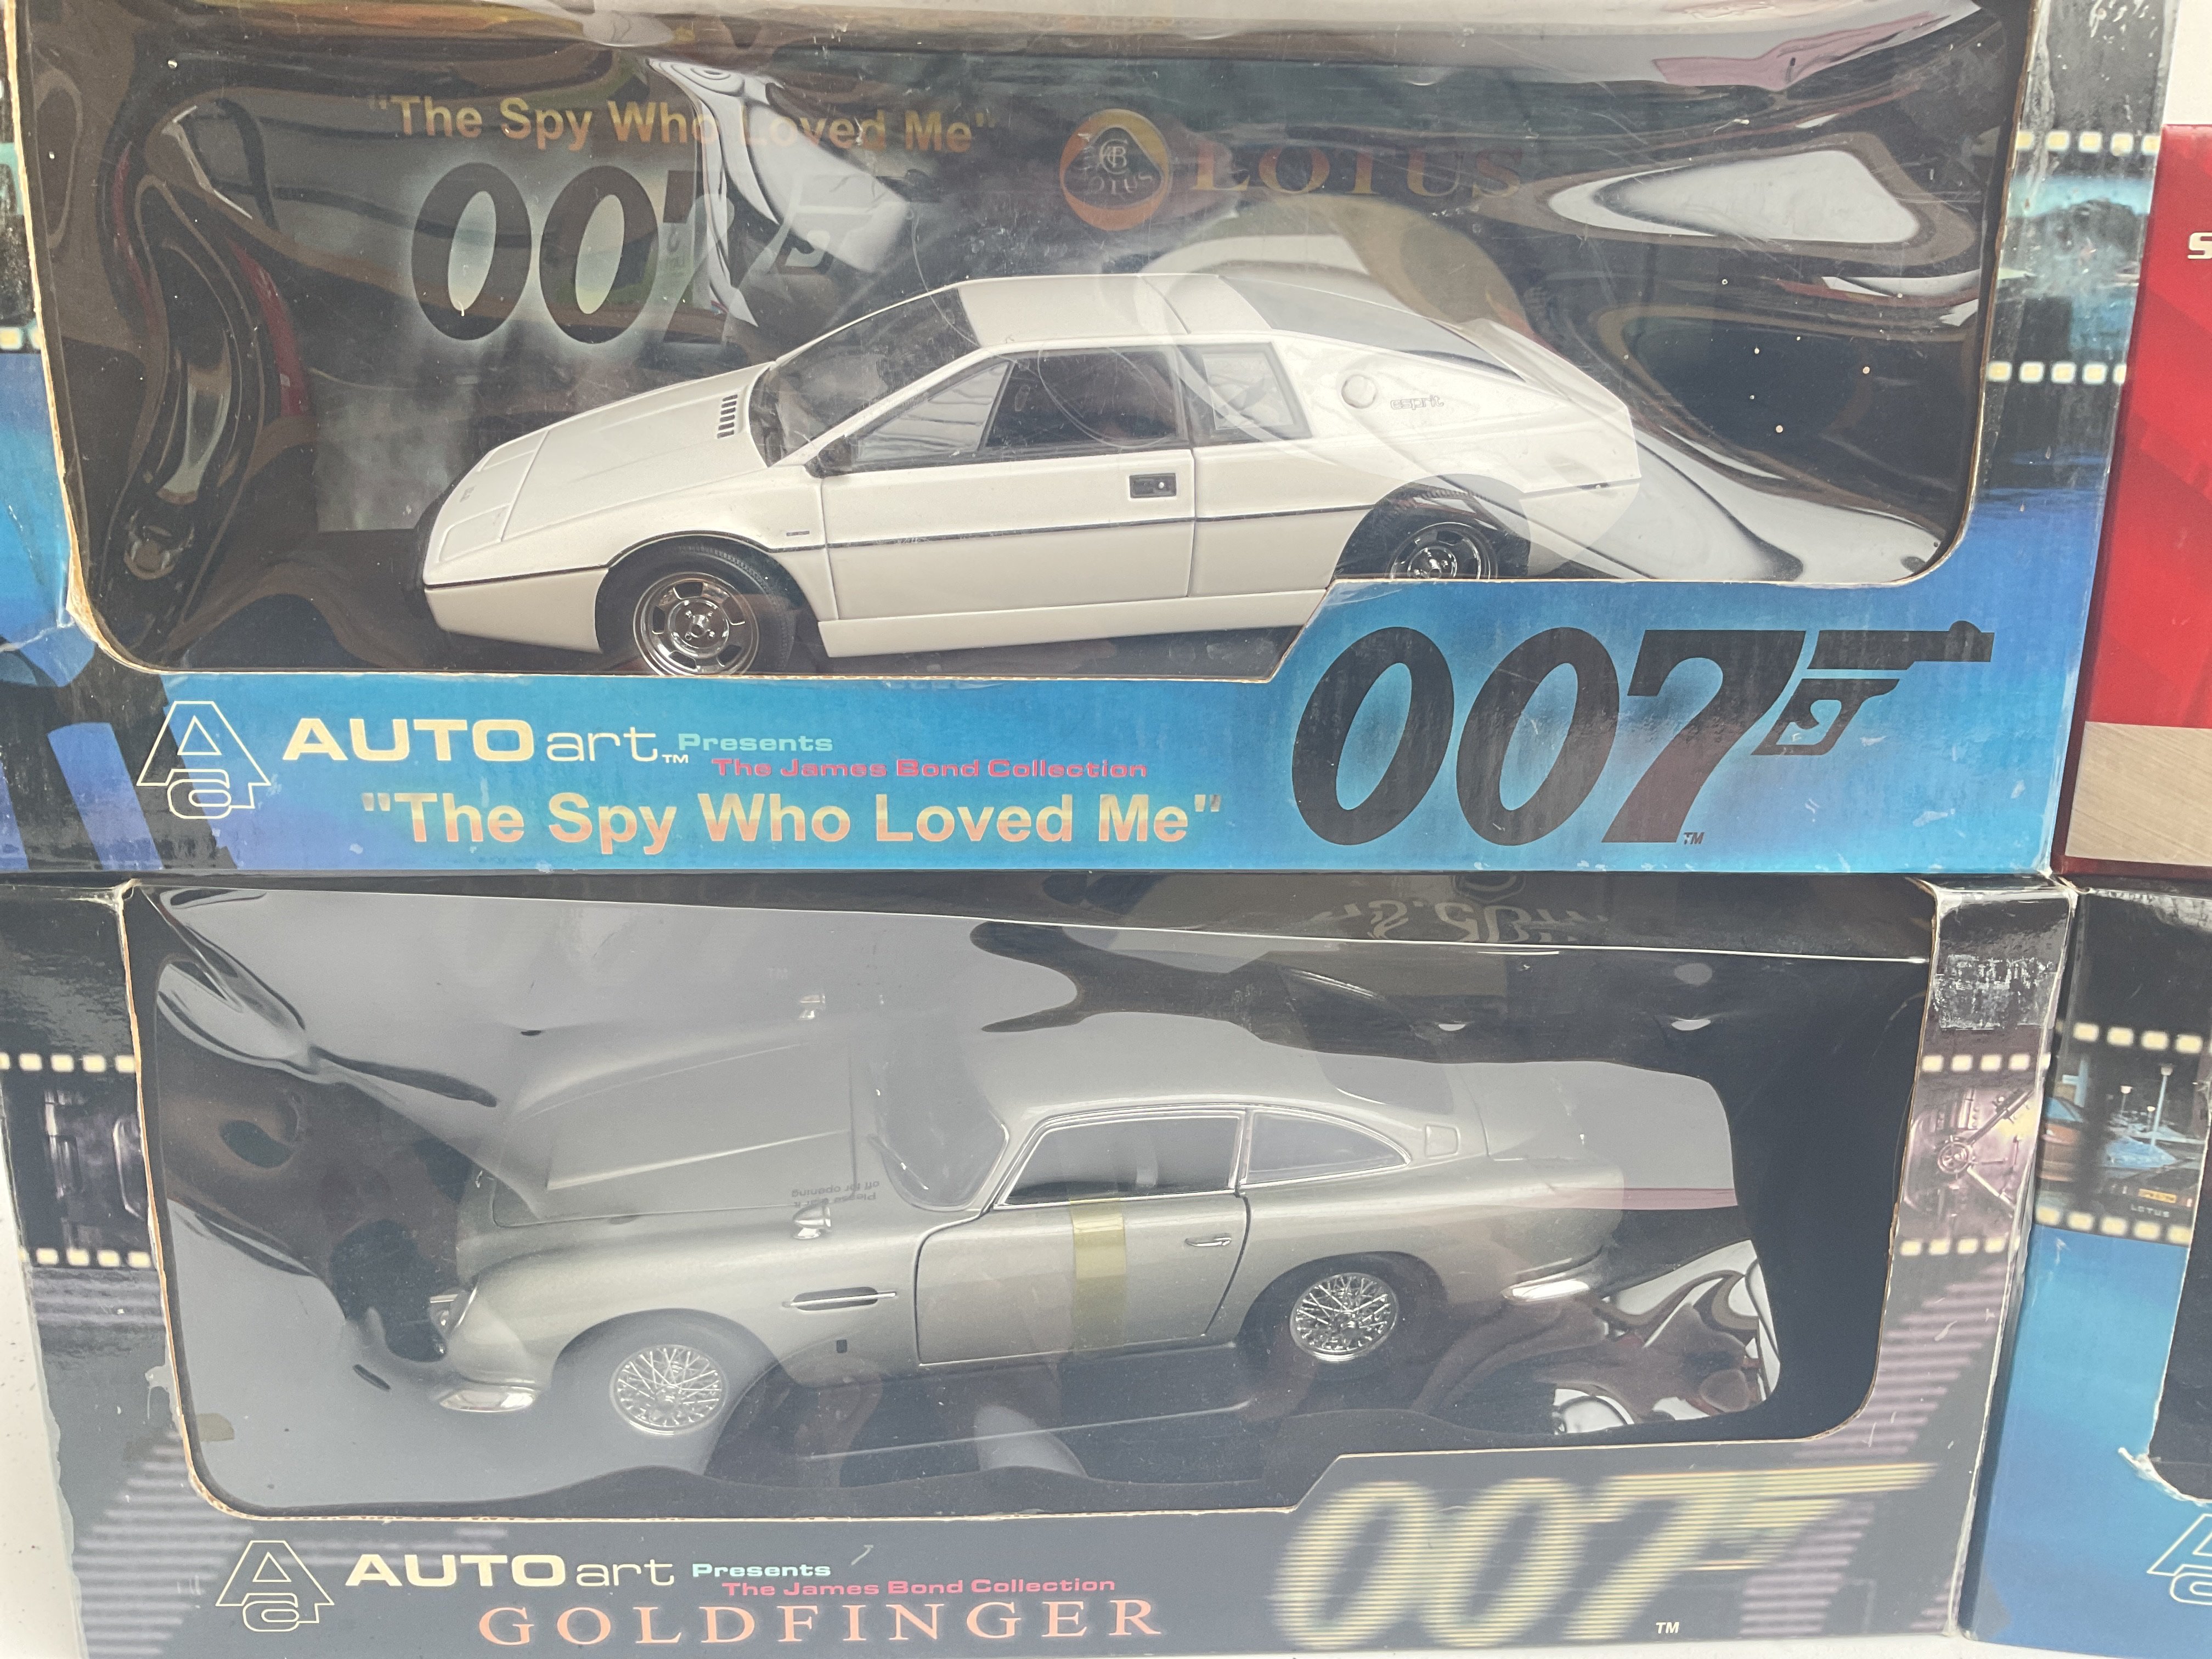 4 X Boxed Cars. 3 James Bond Autoart Cars and a Su - Image 2 of 3